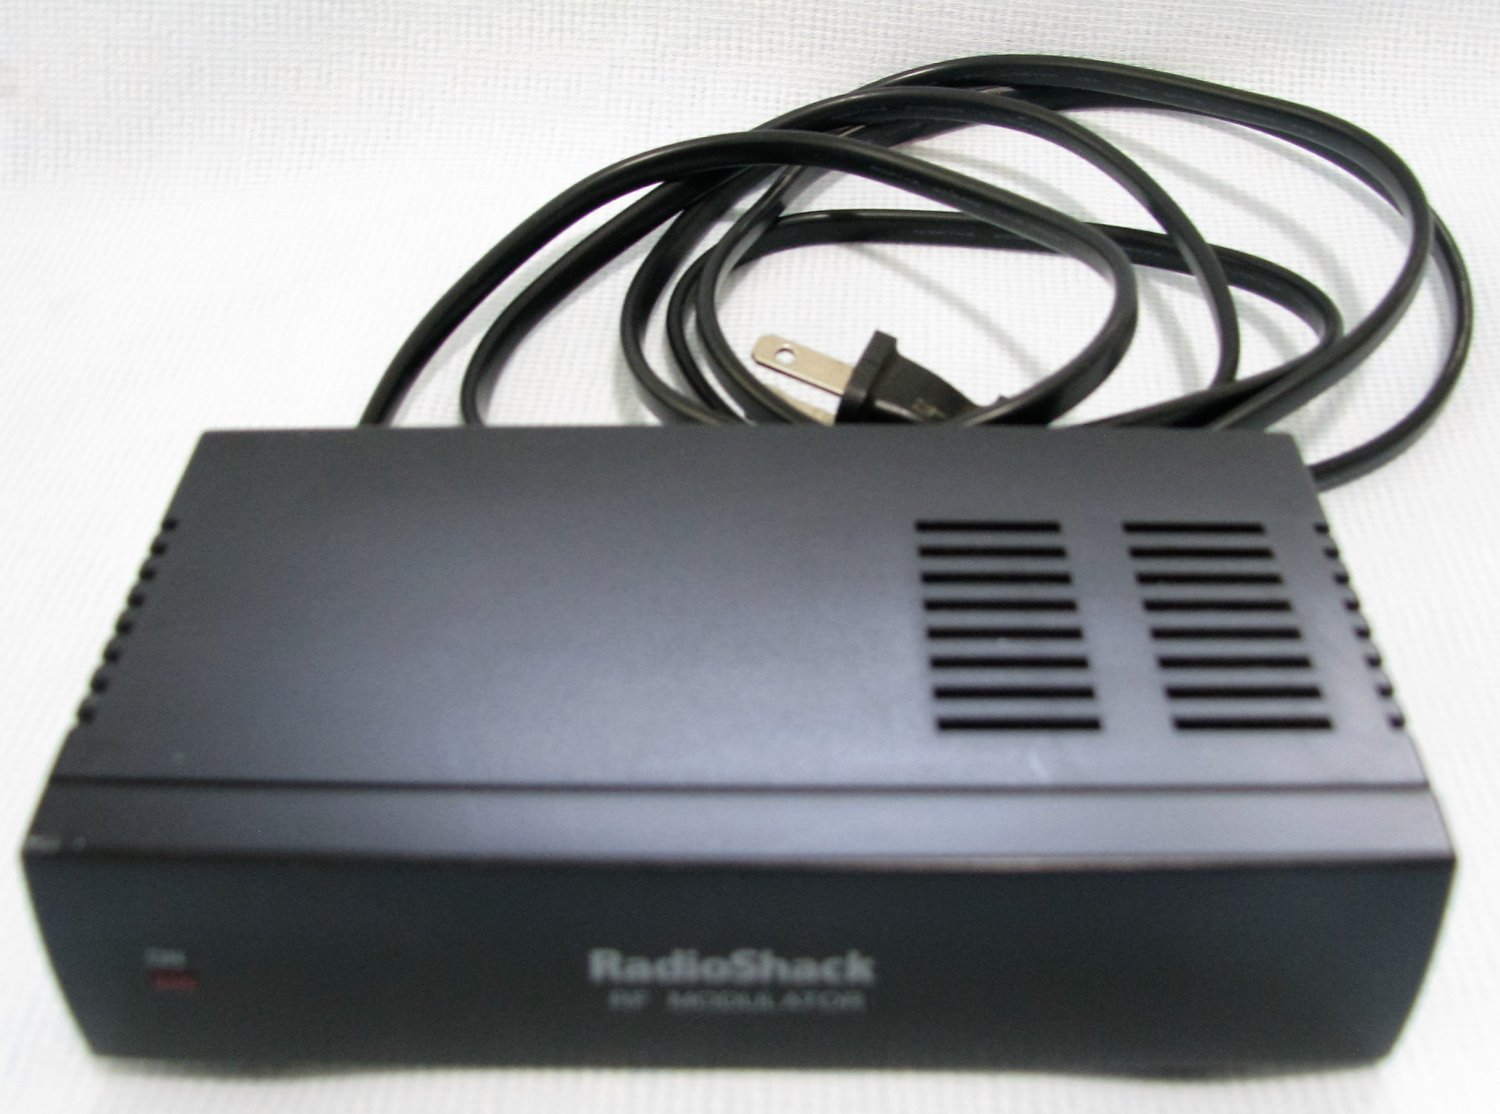 RADIO SHACK RF Modulator 15-1214 AV TV Converter